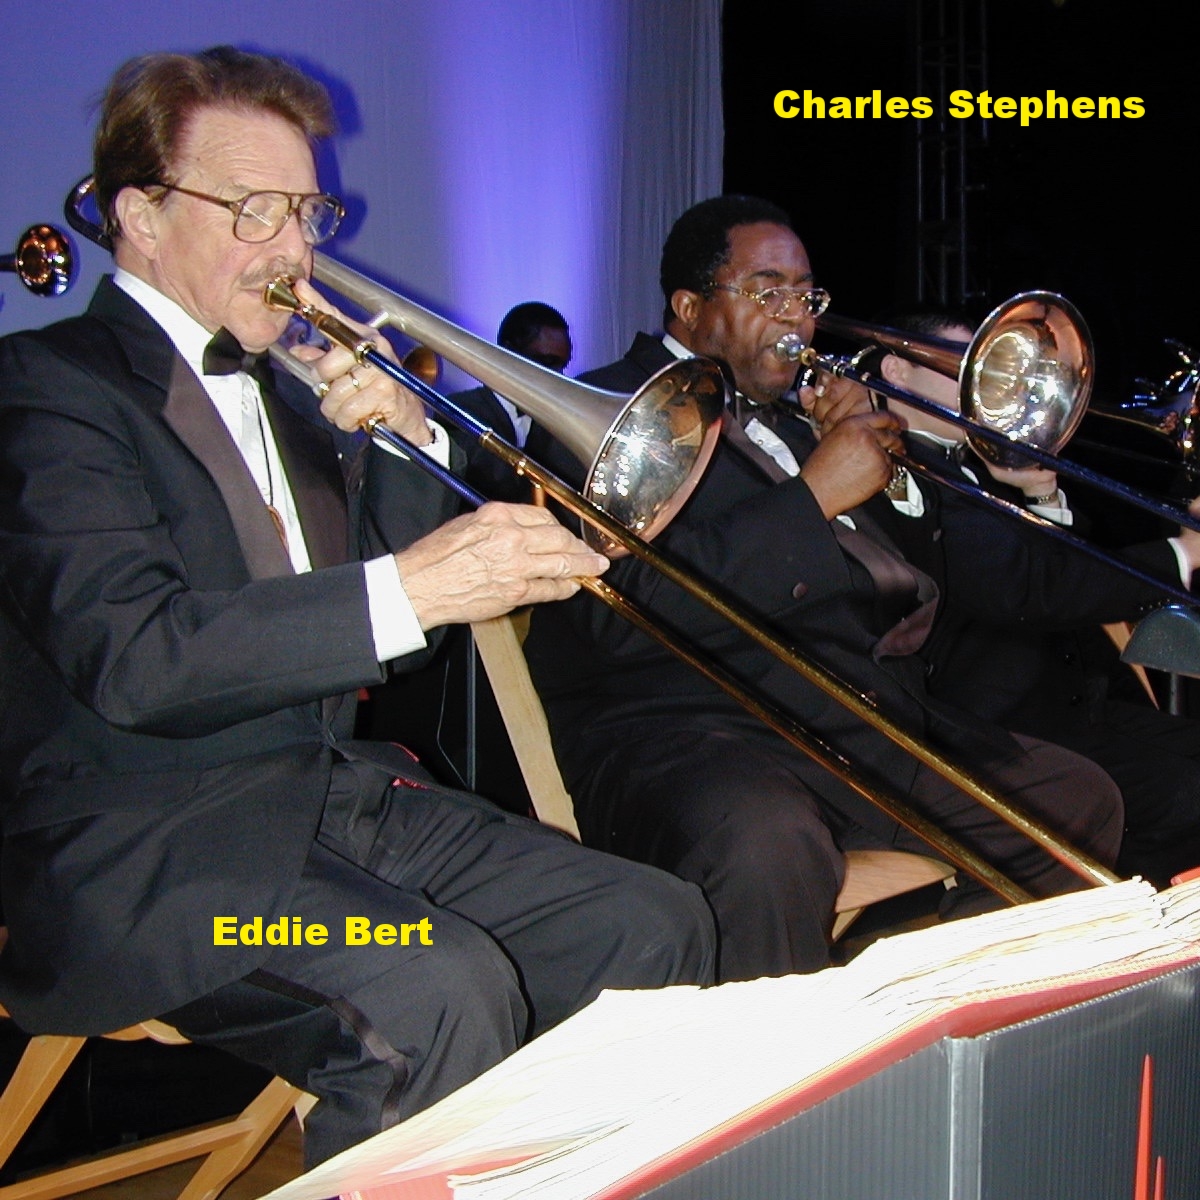 Ed Bert & Charles Stephens